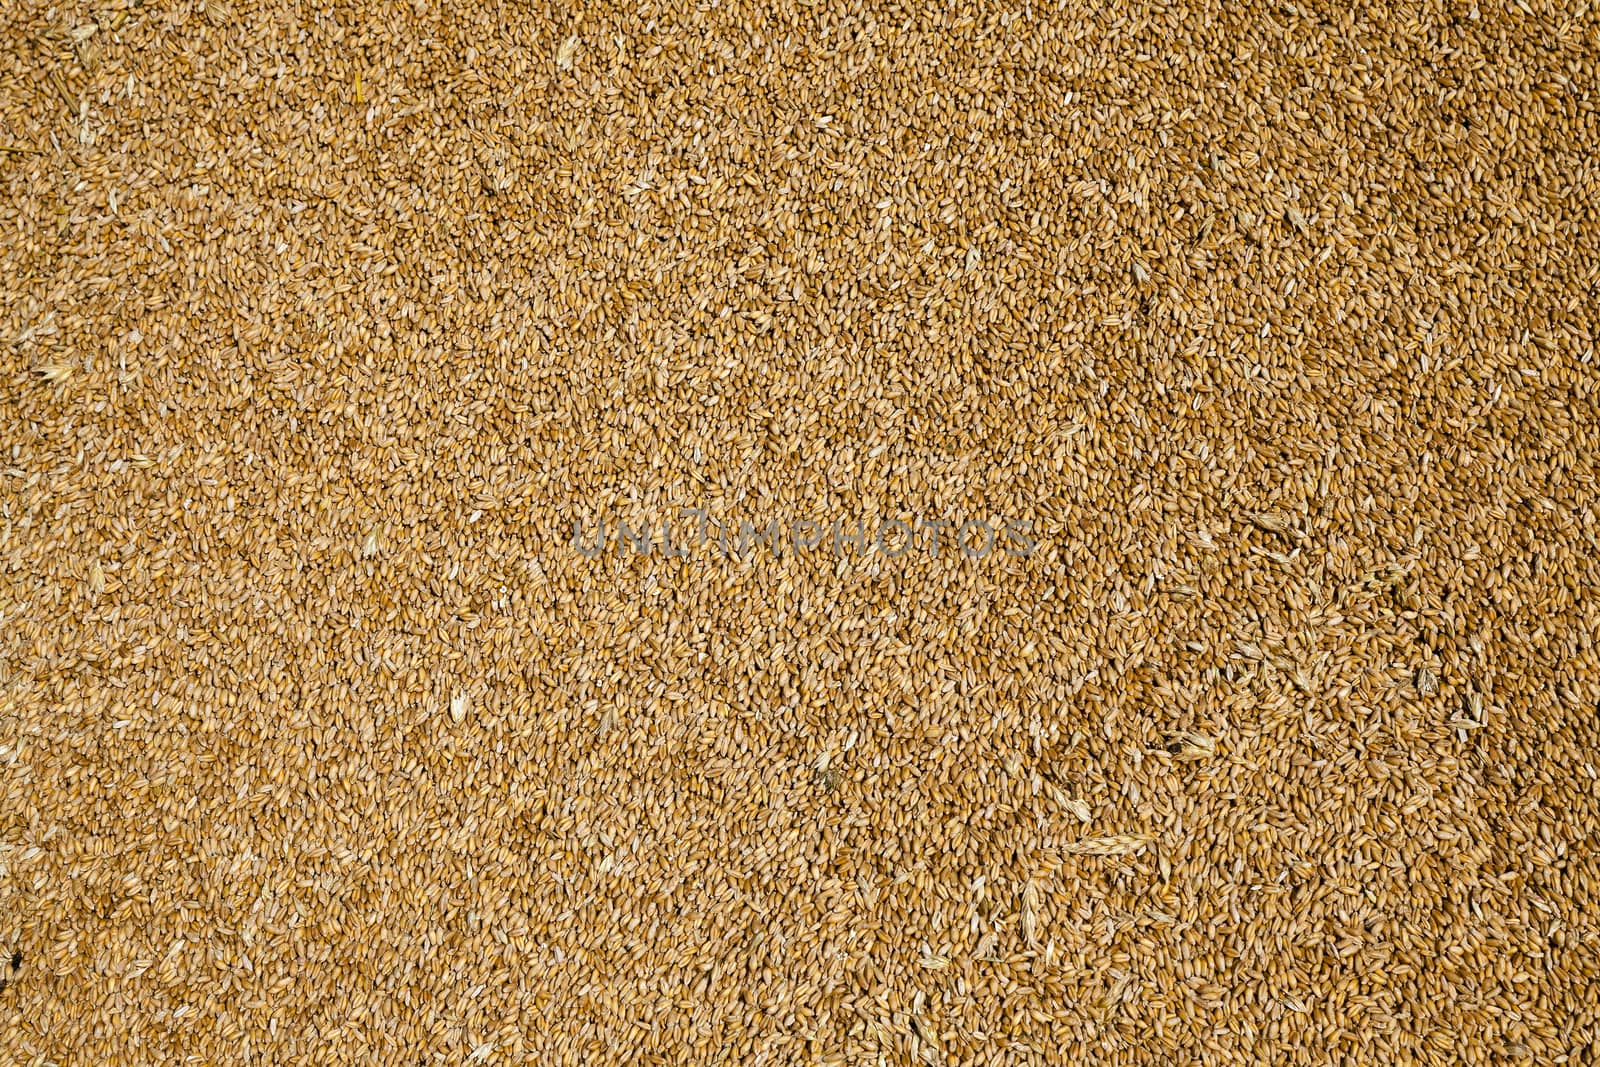 wheat grains .  harvesting by avq